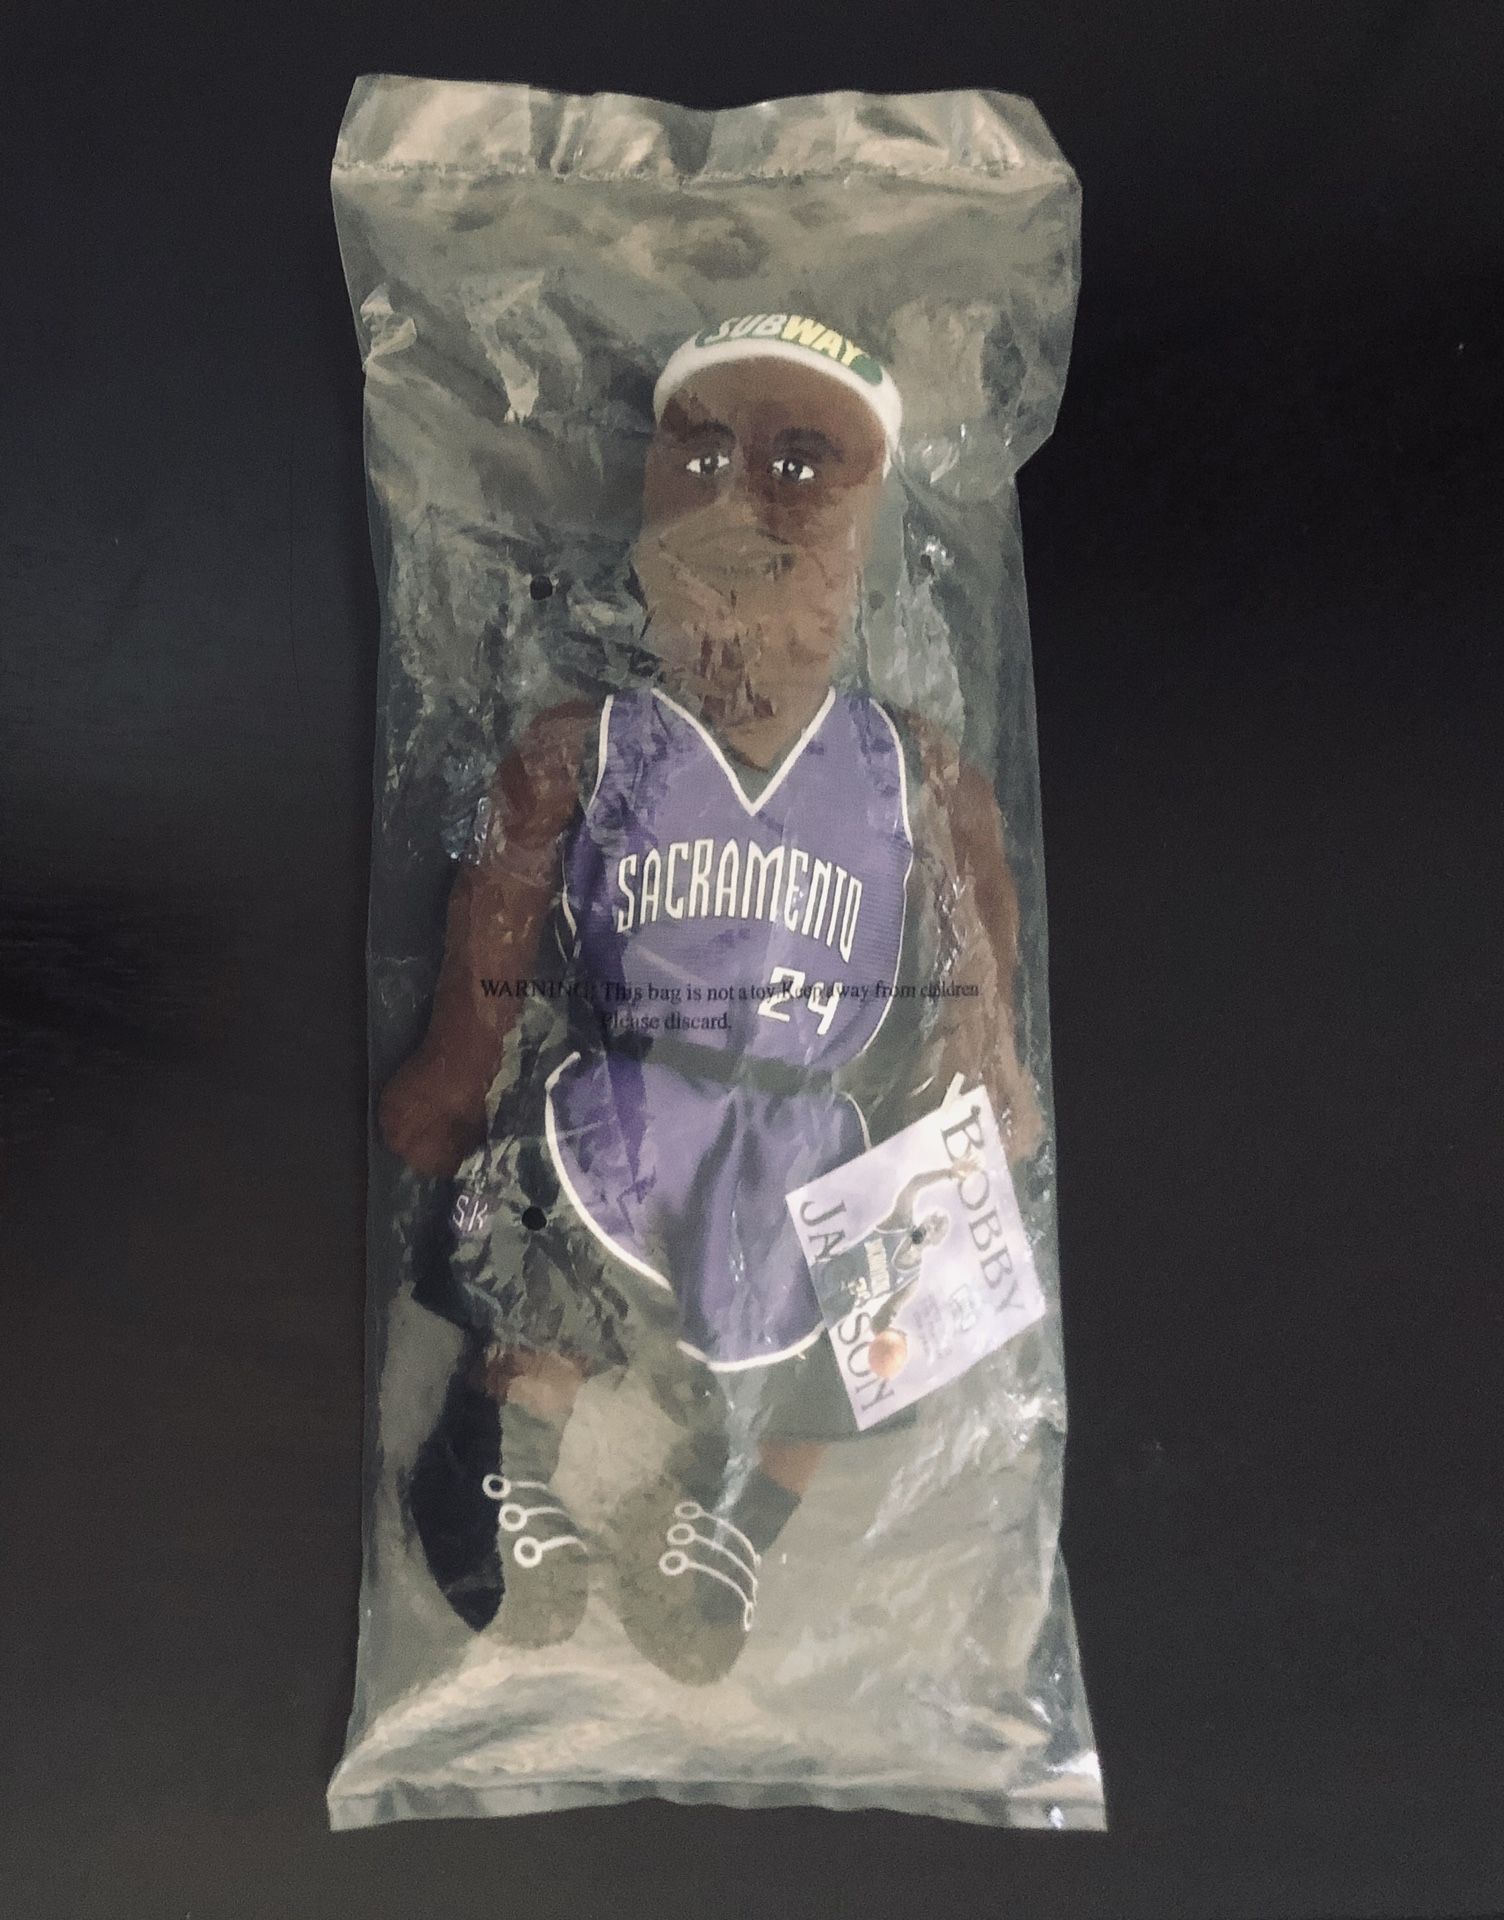 2003 Bobby Jackson Sacramento Kings NBA Basketball 10” Plush Stuffed Beanie Toy Doll 6th Man of The Year Award By Subway - BRAND NEW!